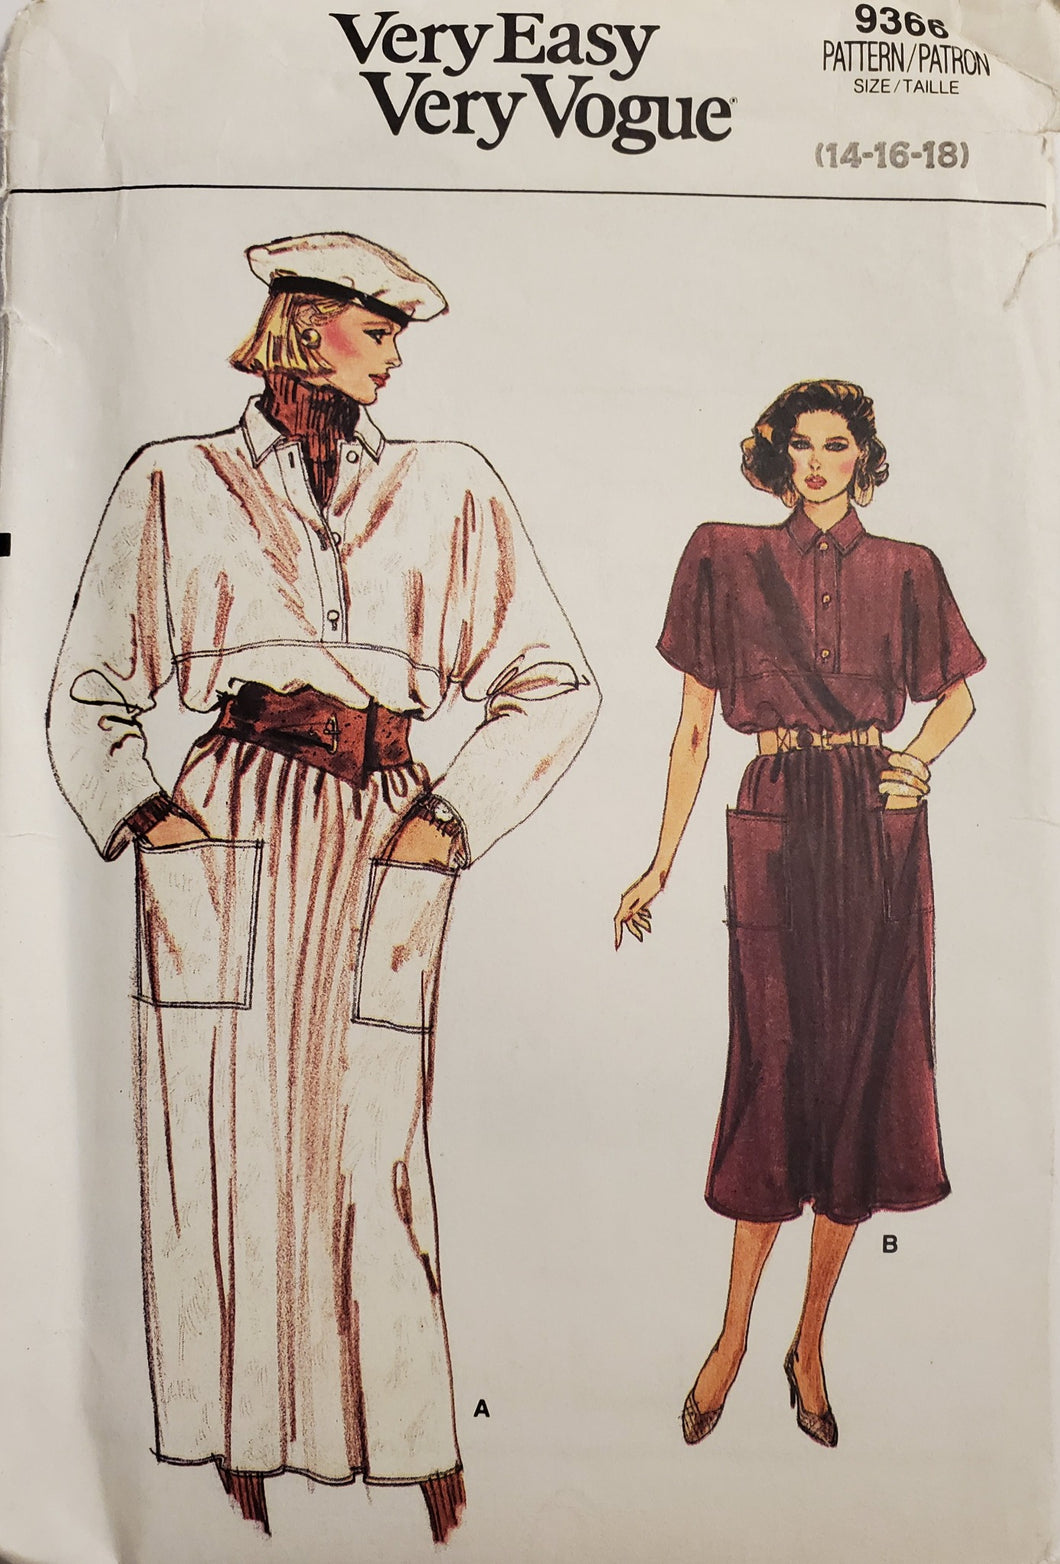 Vogue Pattern 9366, Very Easy, UNCUT, Dress Size 14-16-18, Vintage